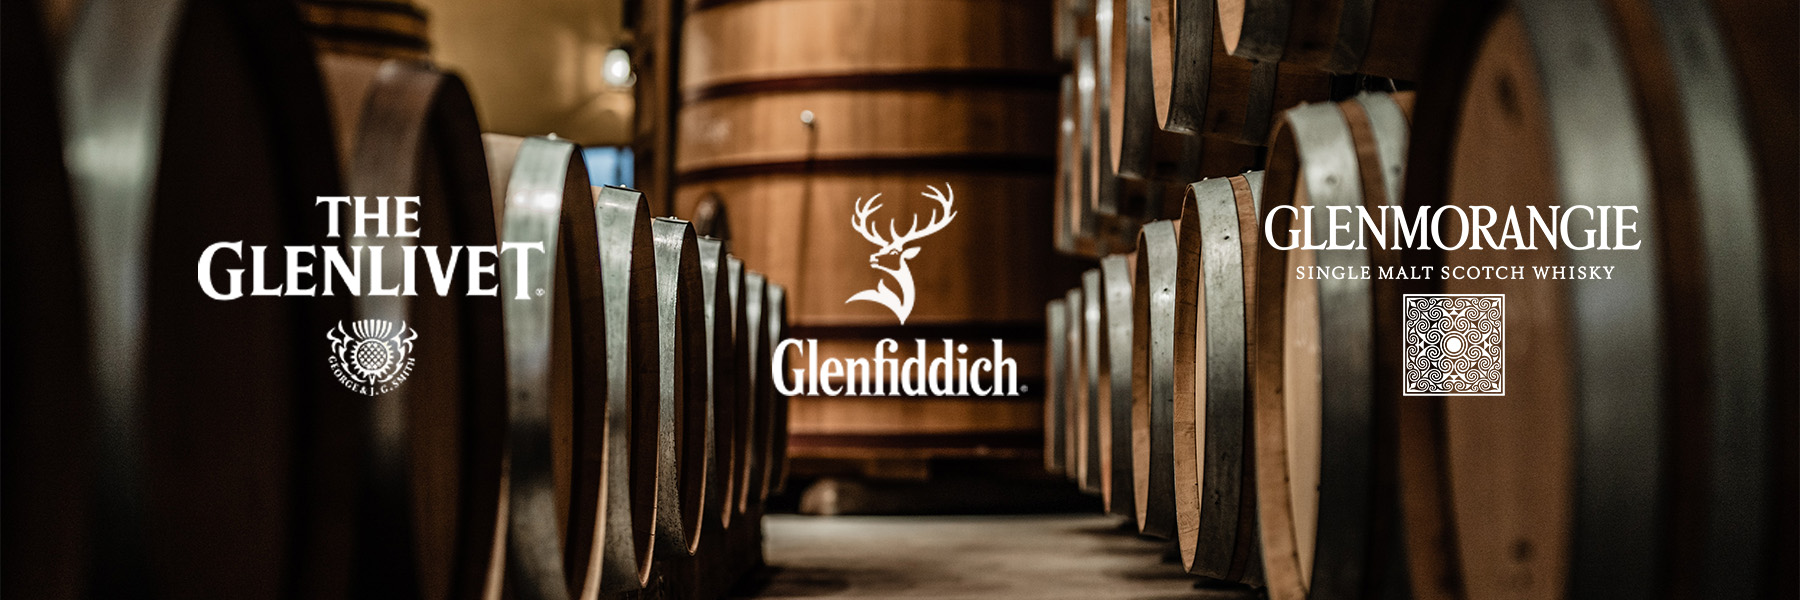 Glenlivet vs Glenfiddich vs Glenmorangie: 3-way Battle of the Glens